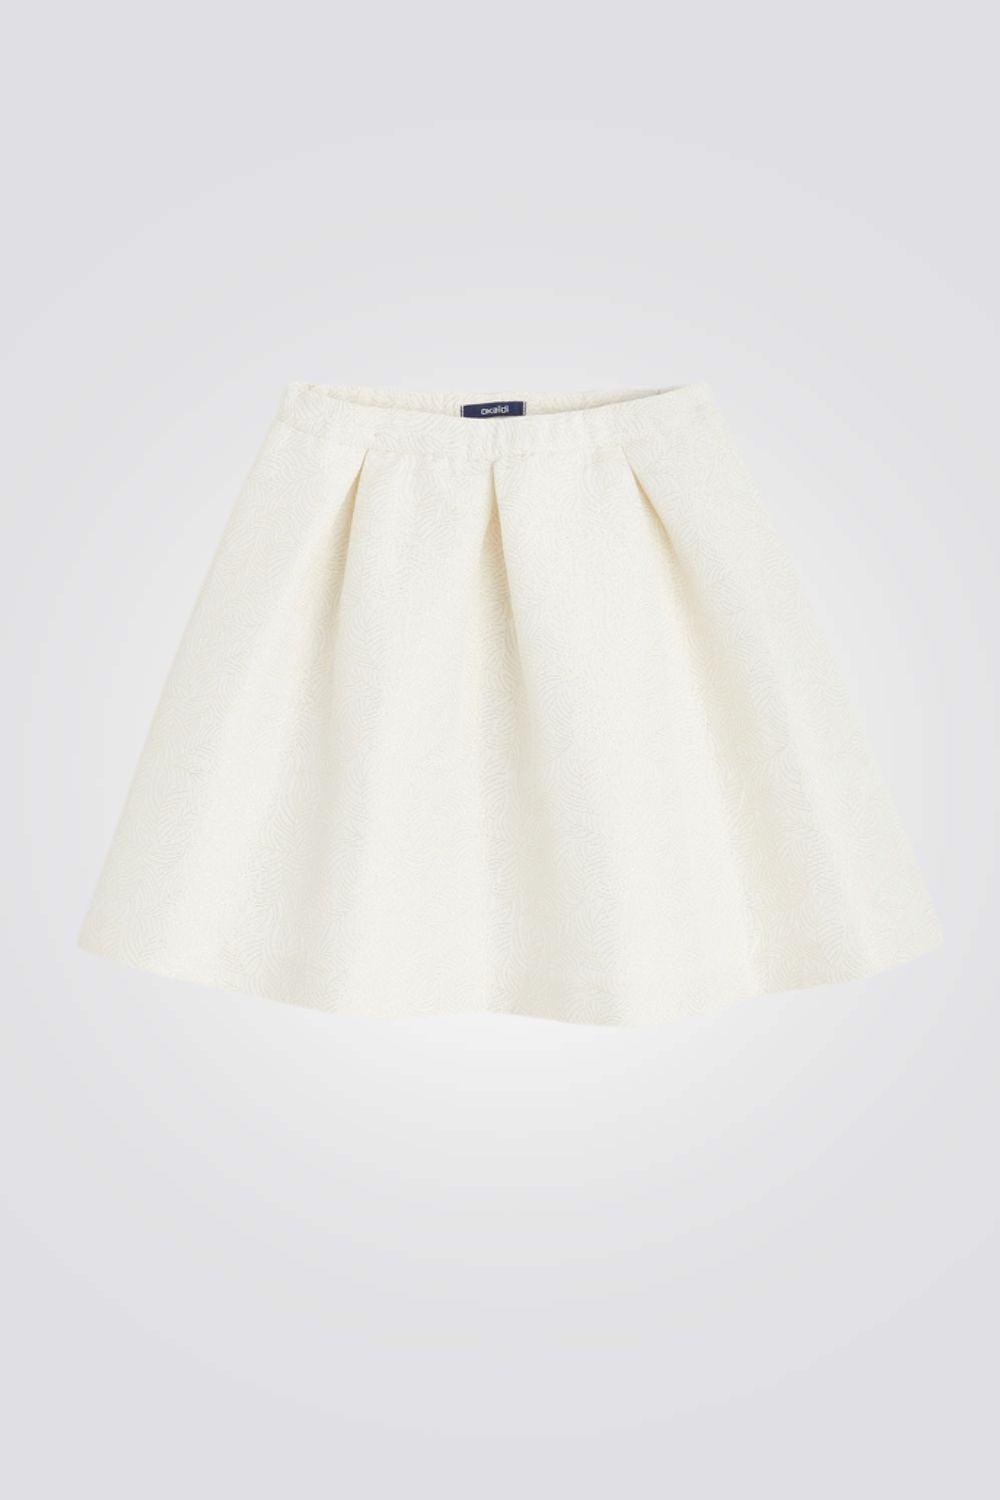 OKAIDI - חצאית עם דפוסים ססגונים צבע לבן - MASHBIR//365